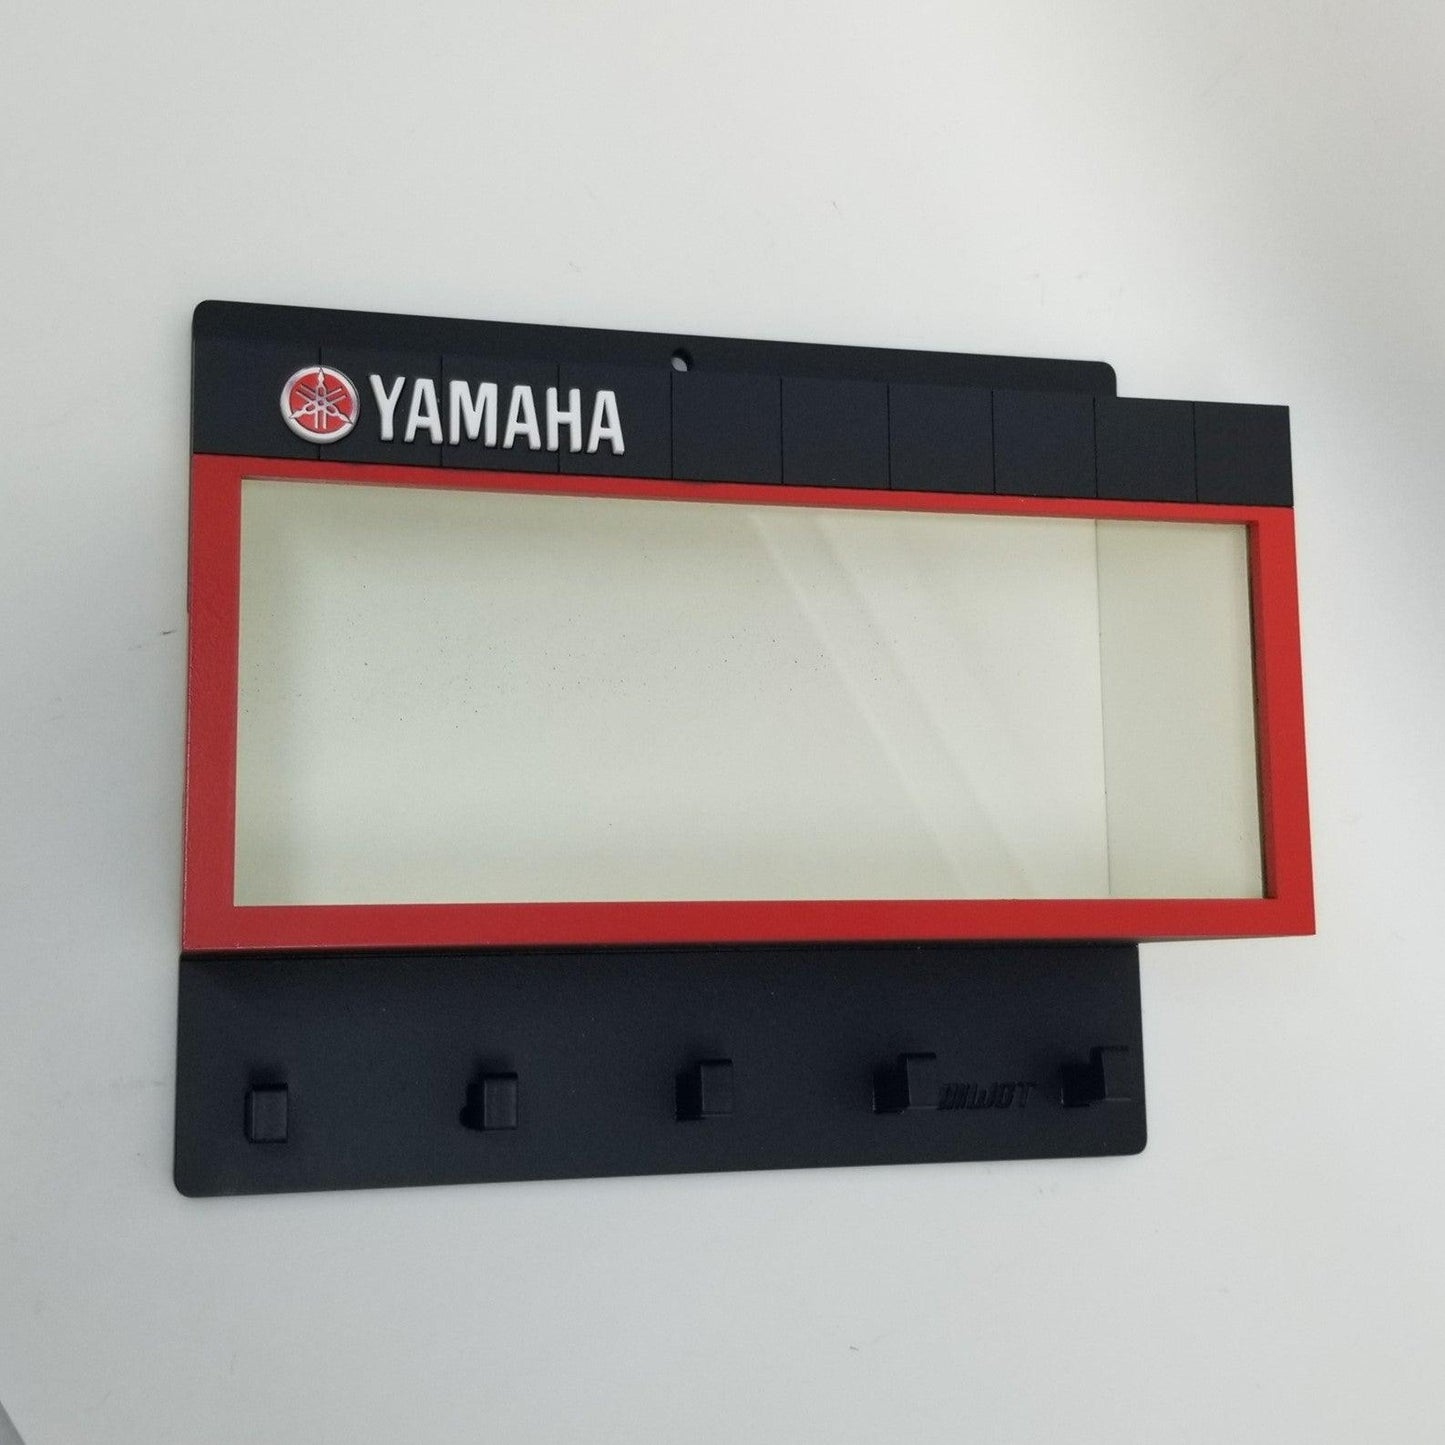 Yamaha Dealership Wall Key Hook Rack - Exclusive item - Handcrafted Key Holder - Brazilian Shop